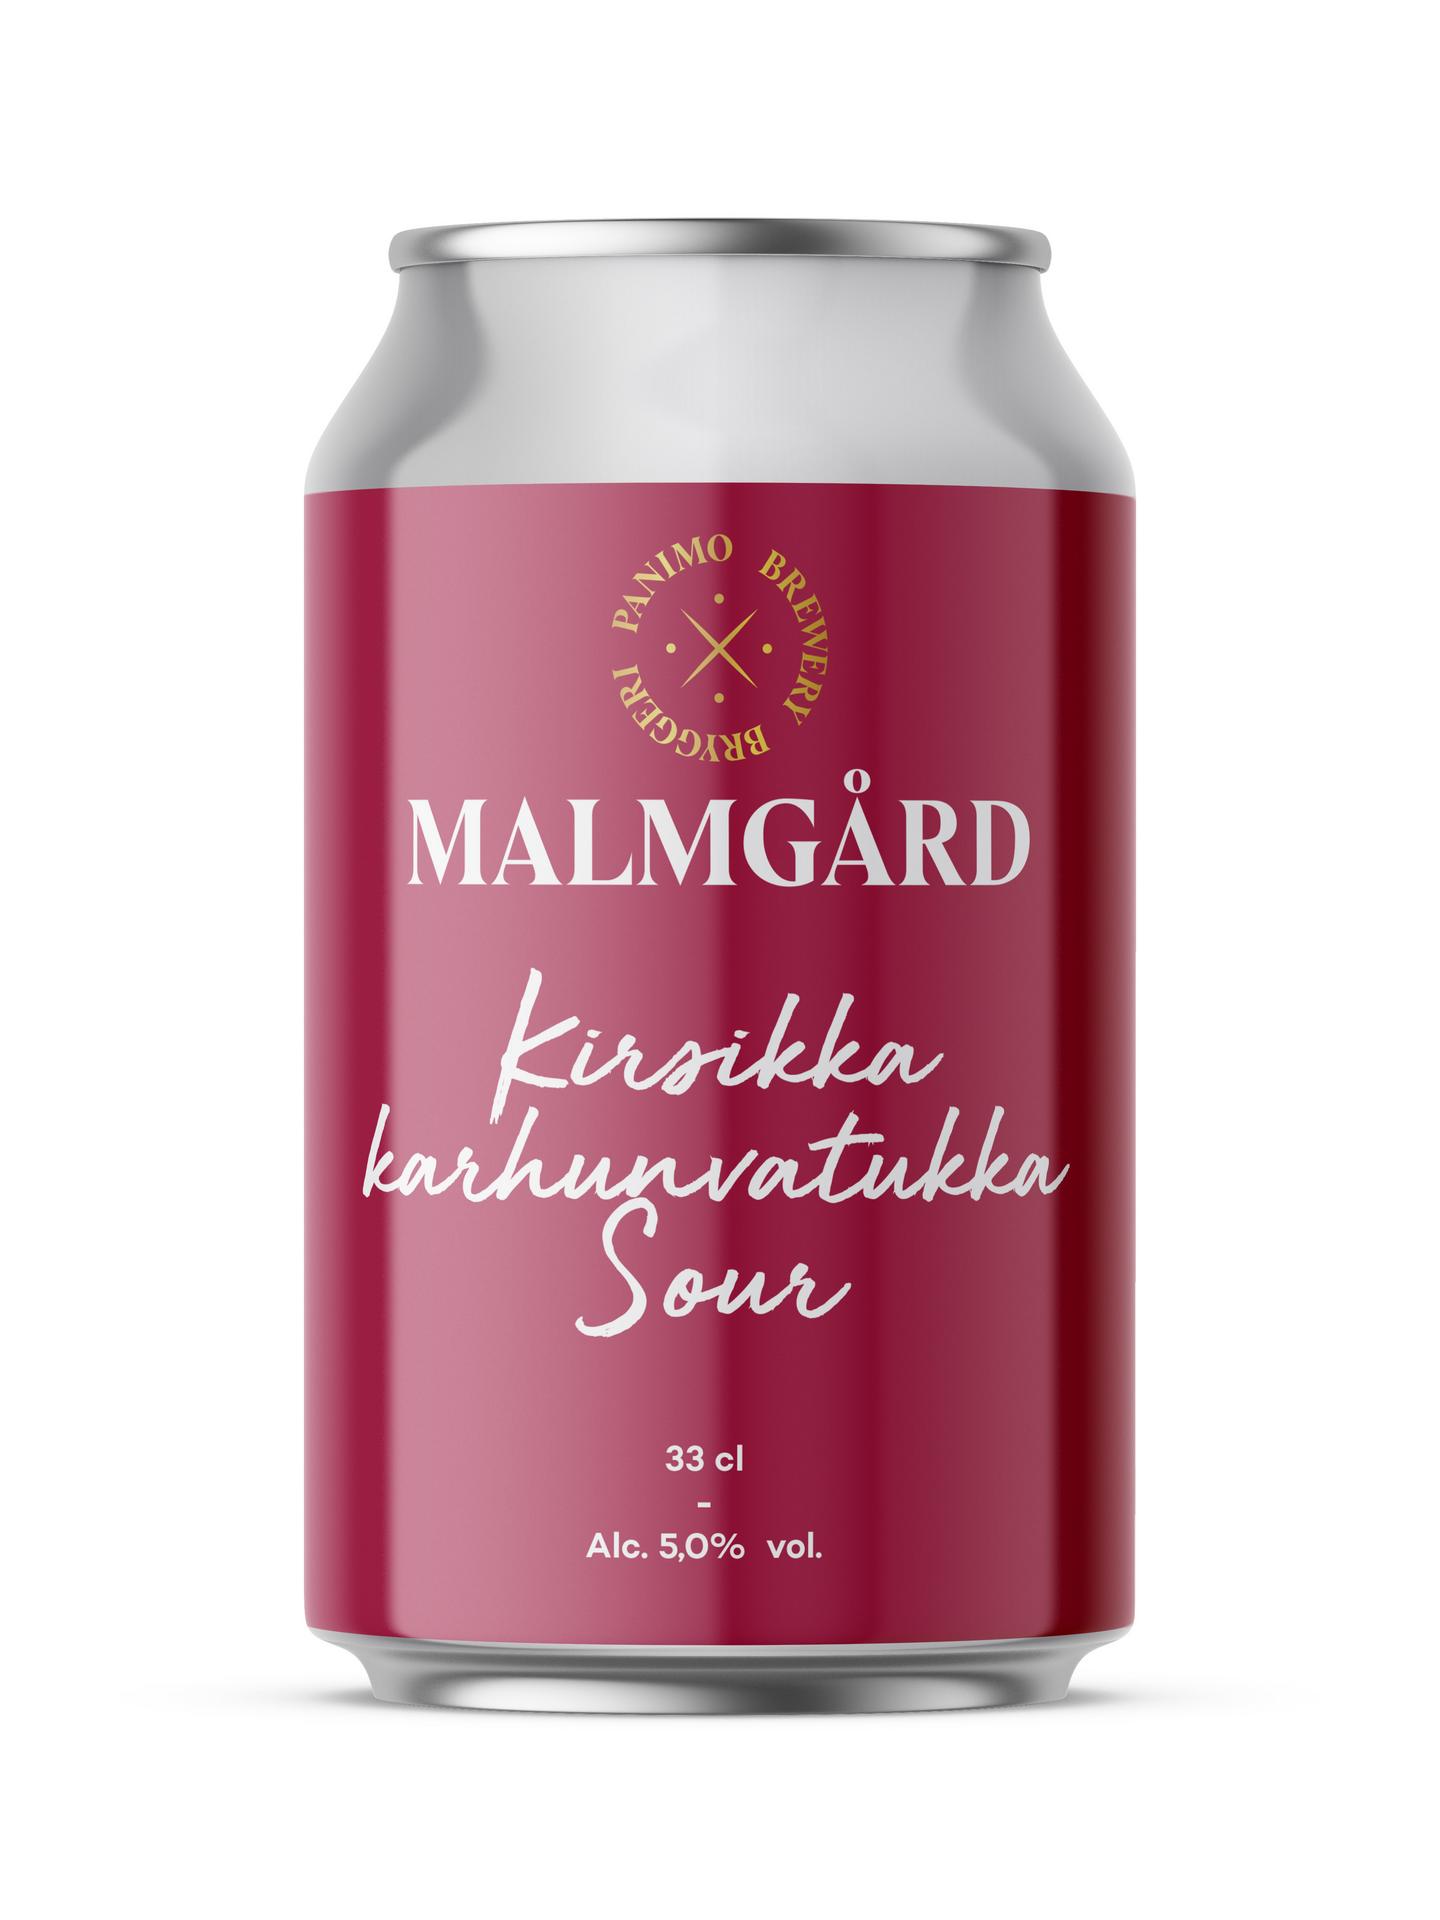 Malmgård Kirsikka Karhunvatukka Sour olut  5,0% 0,33l